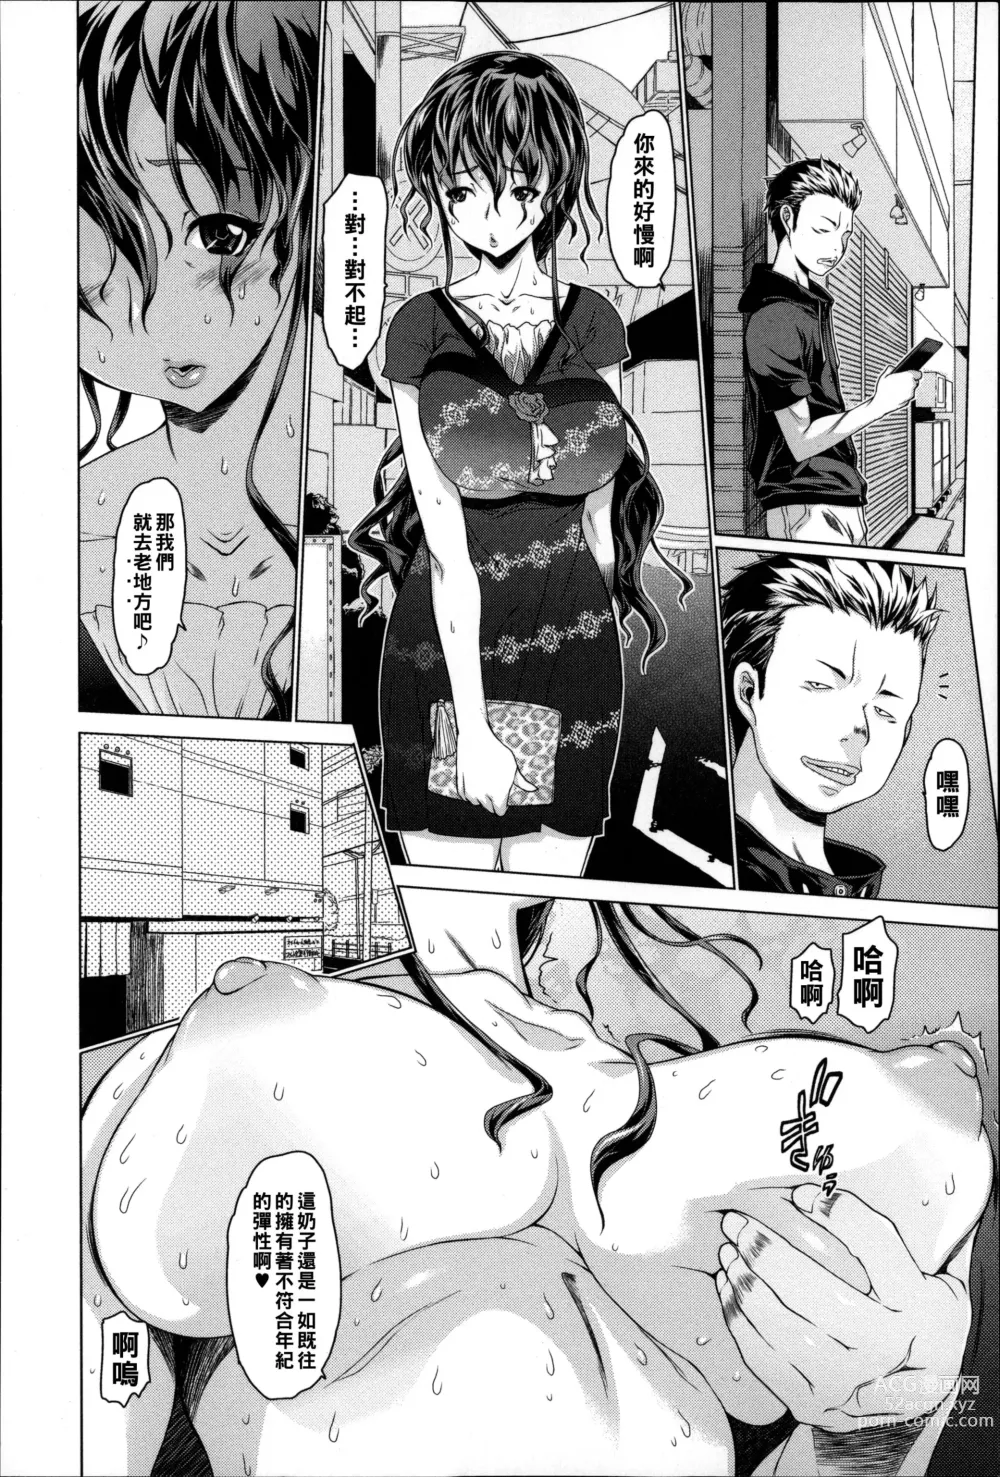 Page 2 of manga Haha, Buhiru.